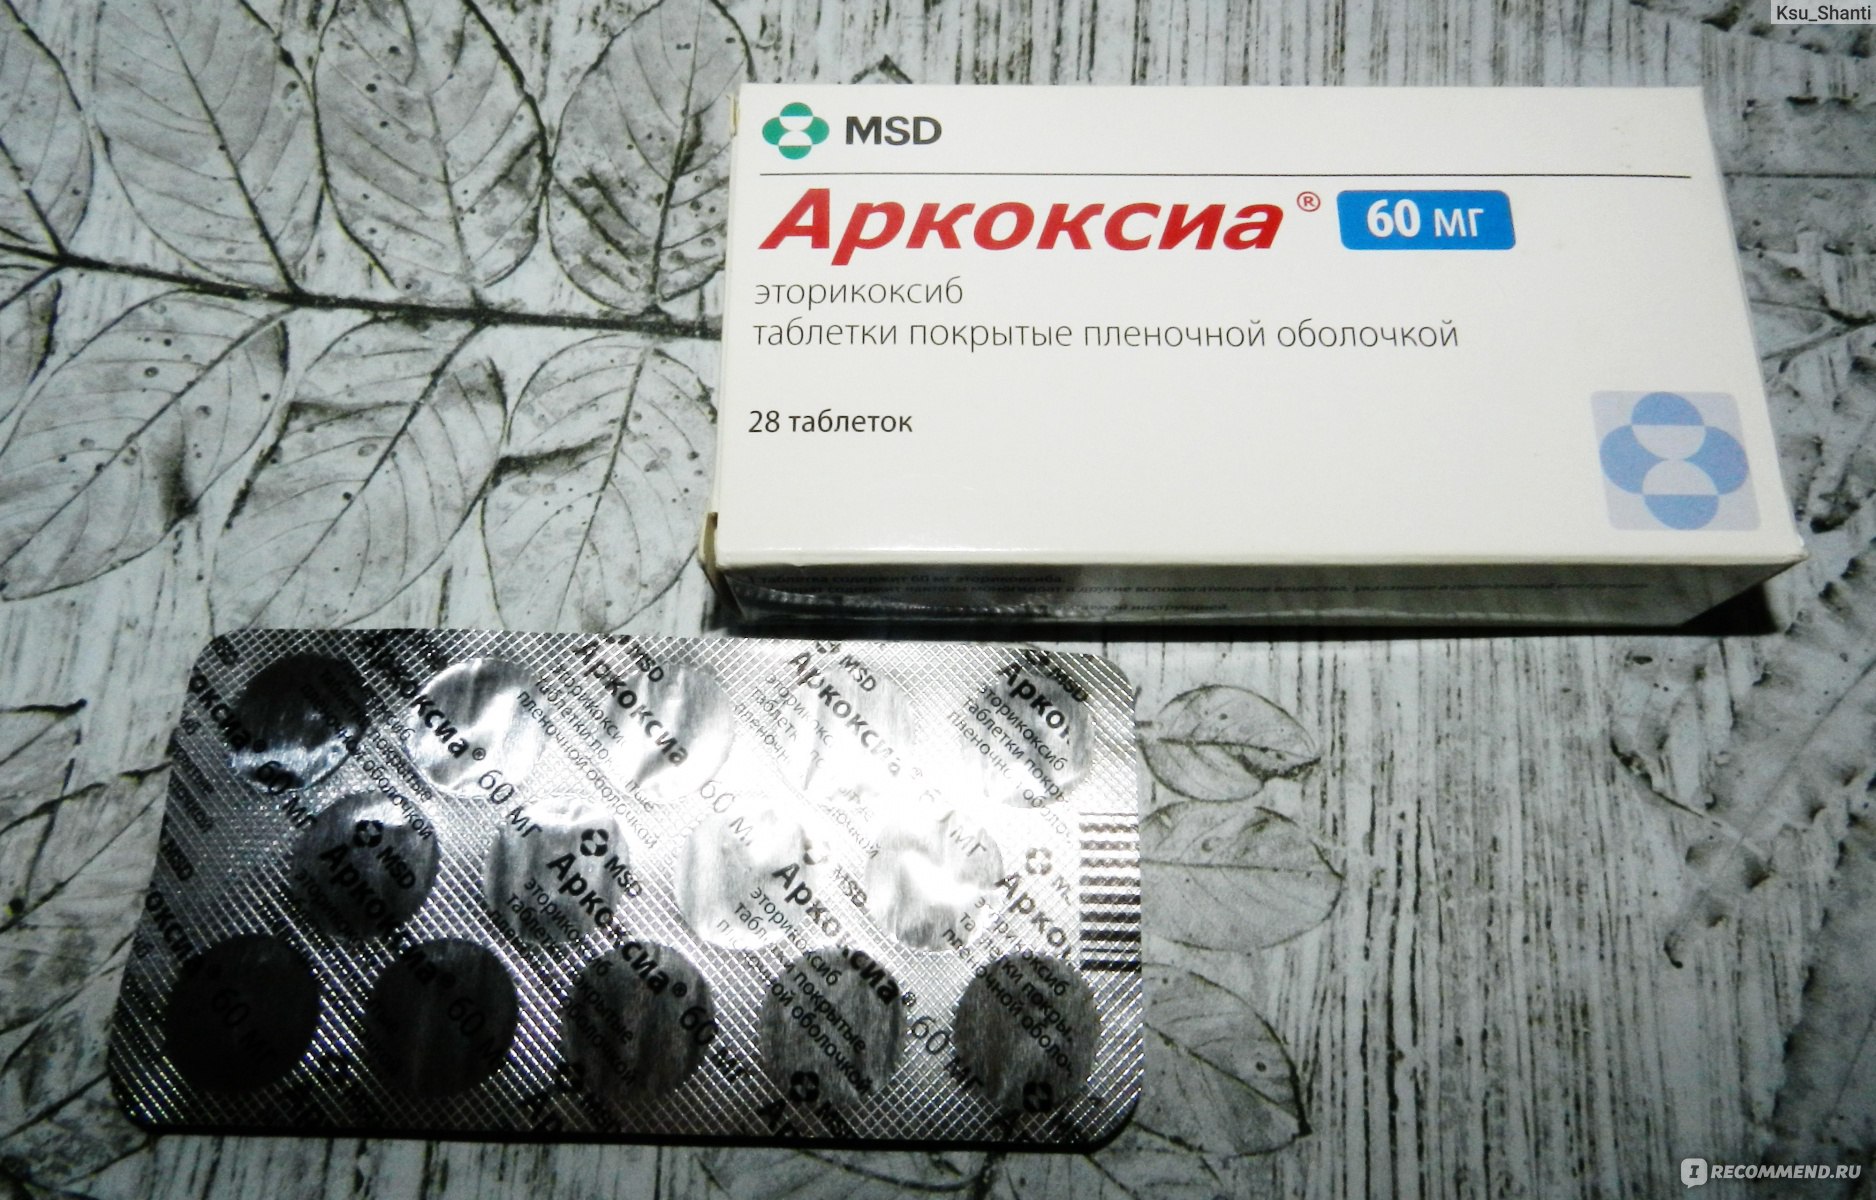 Применение препарата Аркоксиа при грыже позвоночника